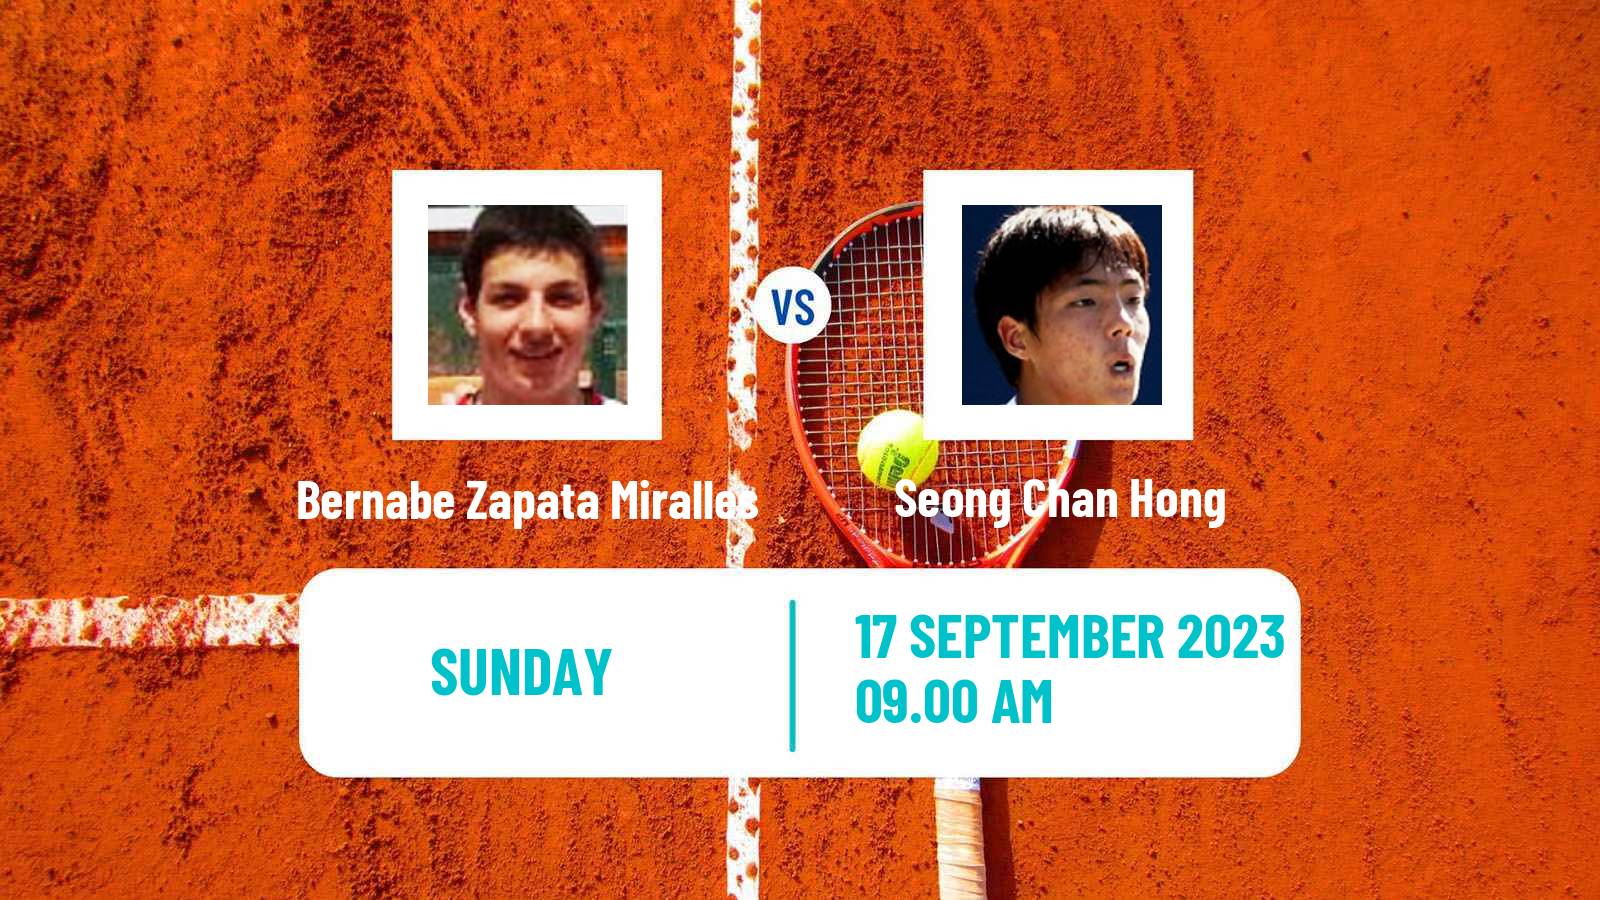 Tennis Davis Cup World Group Bernabe Zapata Miralles - Seong Chan Hong